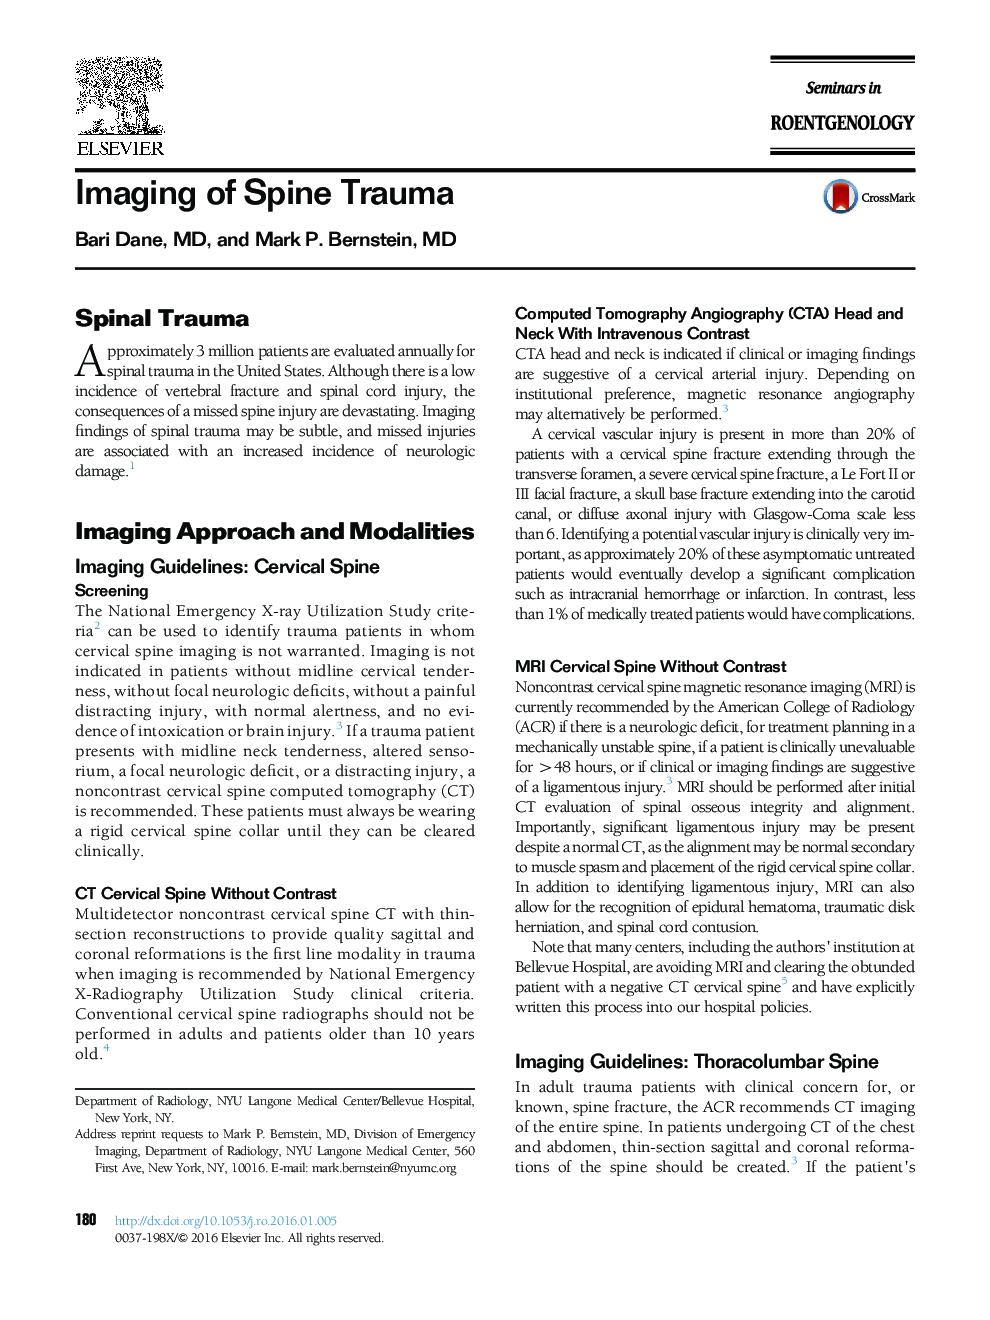 Imaging of Spine Trauma